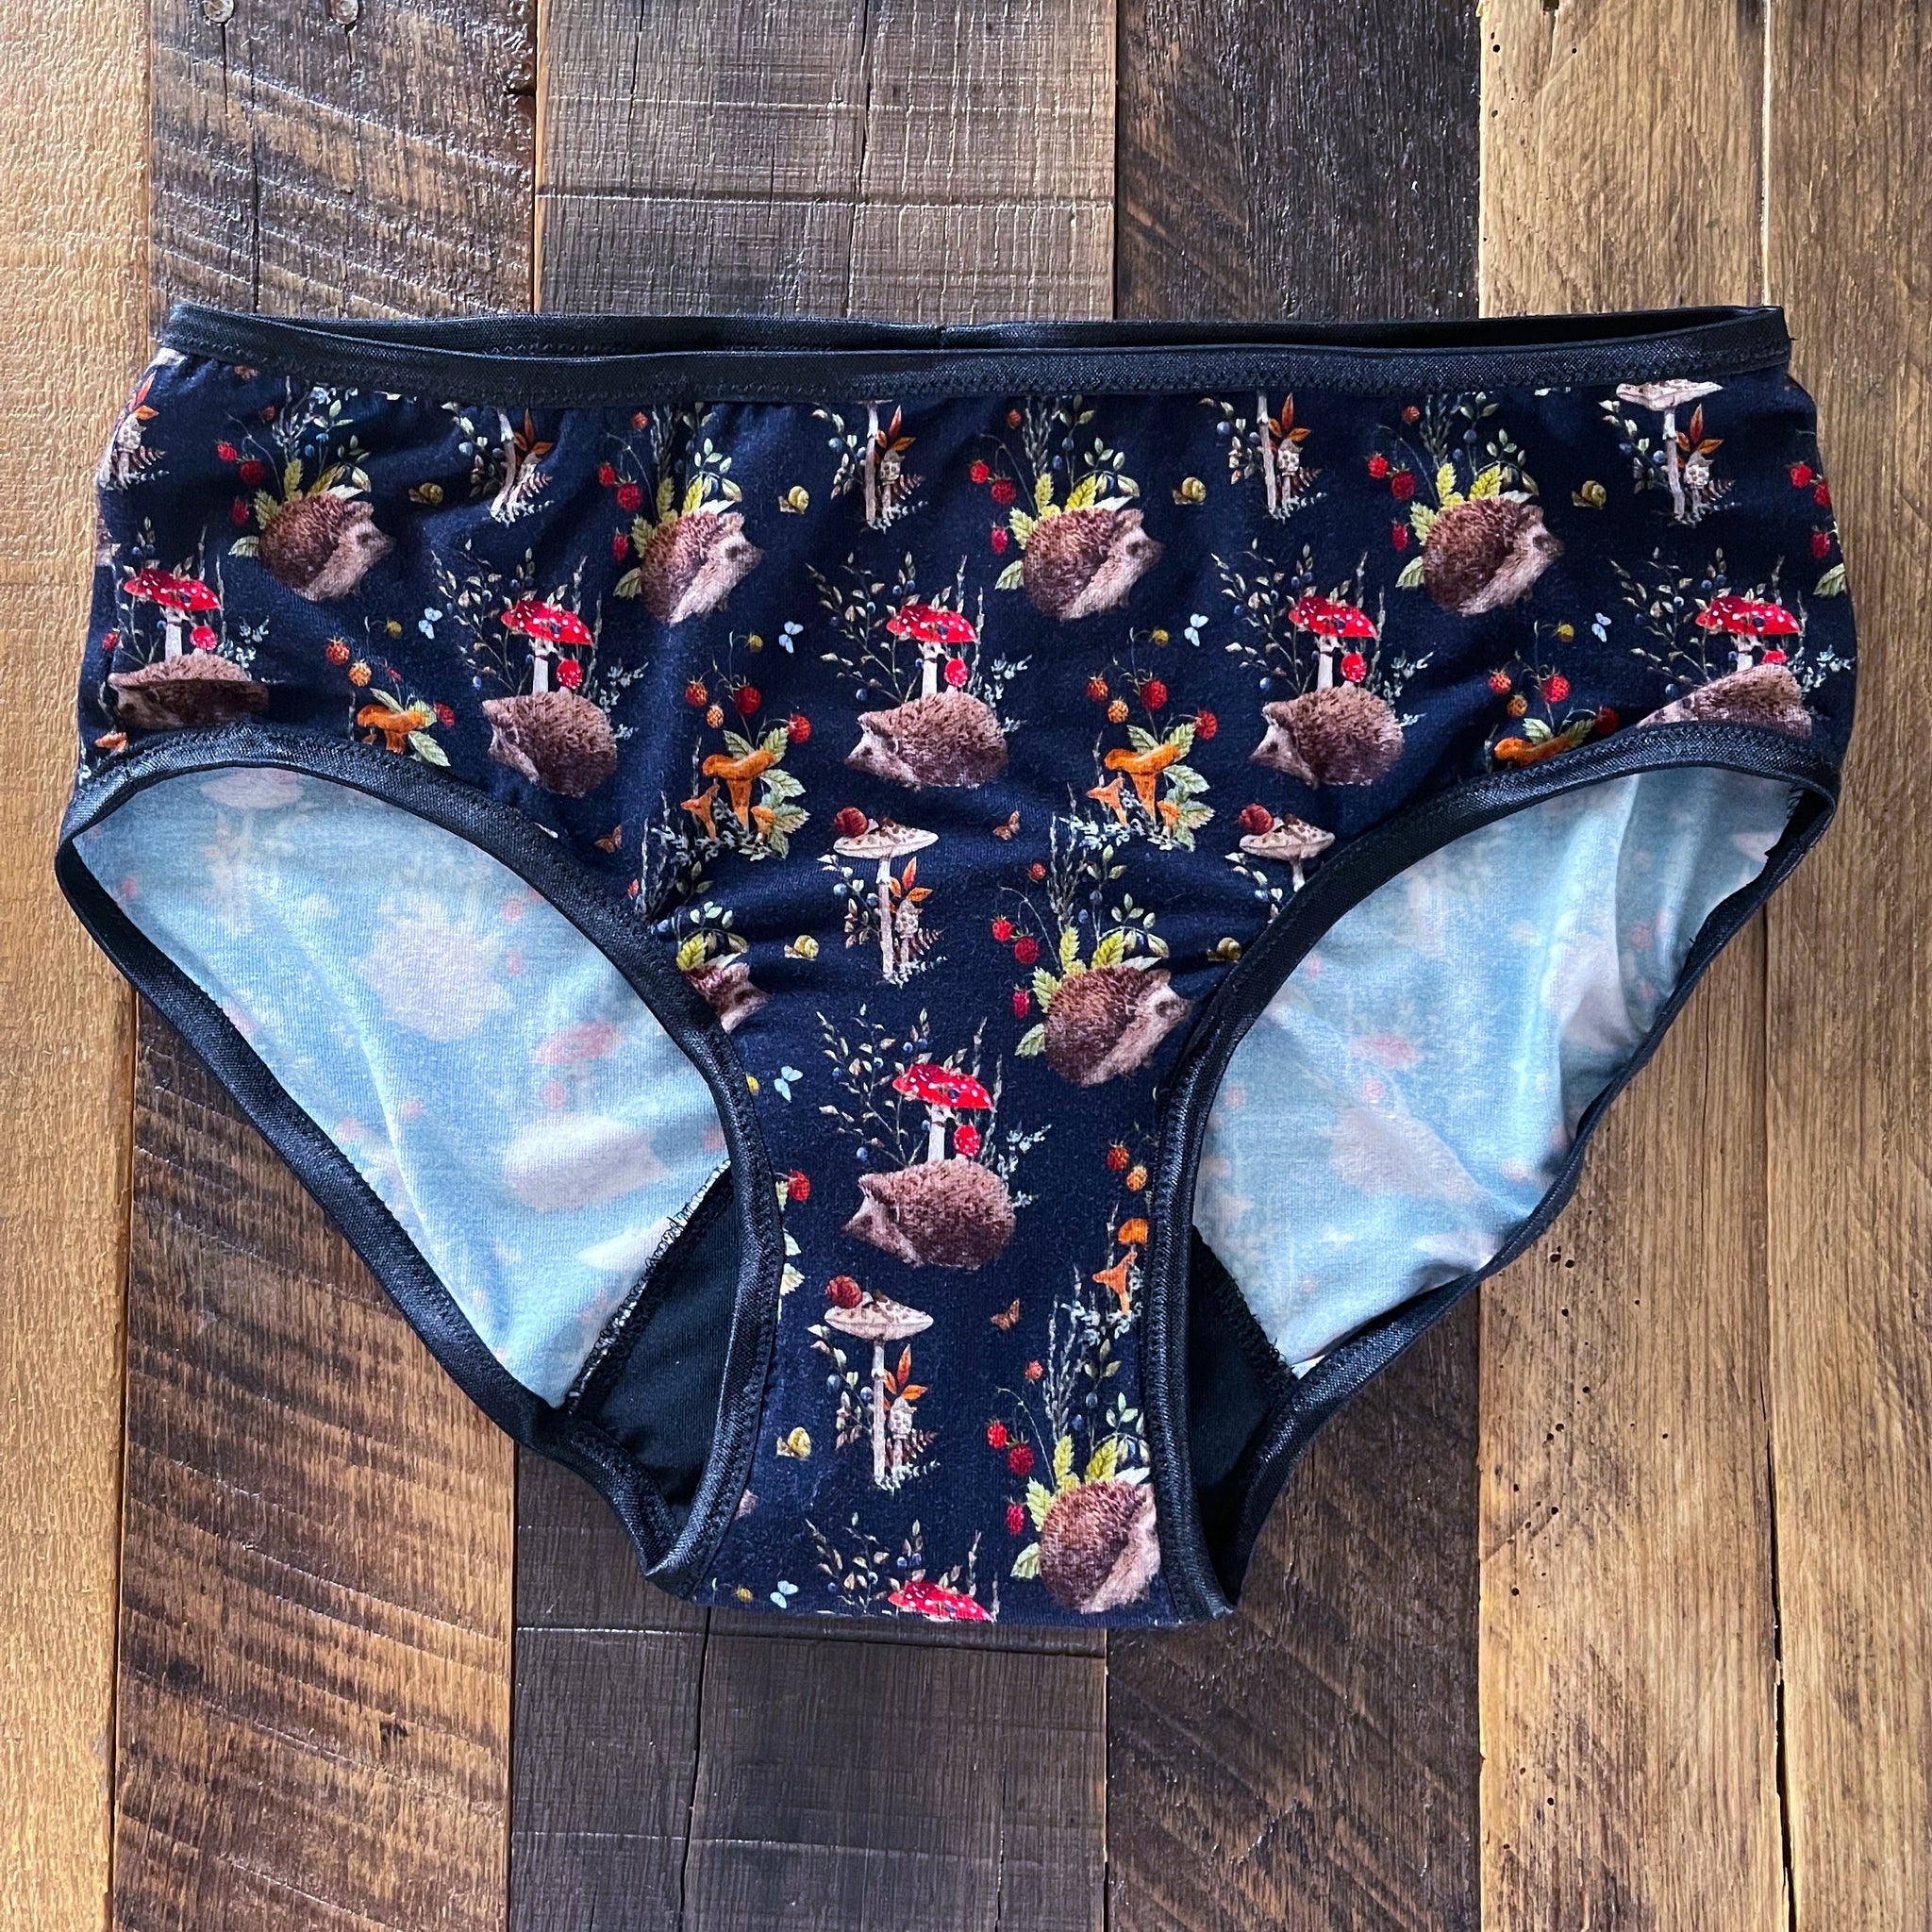 Absorbent Period Panty Underwear with Inner Layer Panties Undies